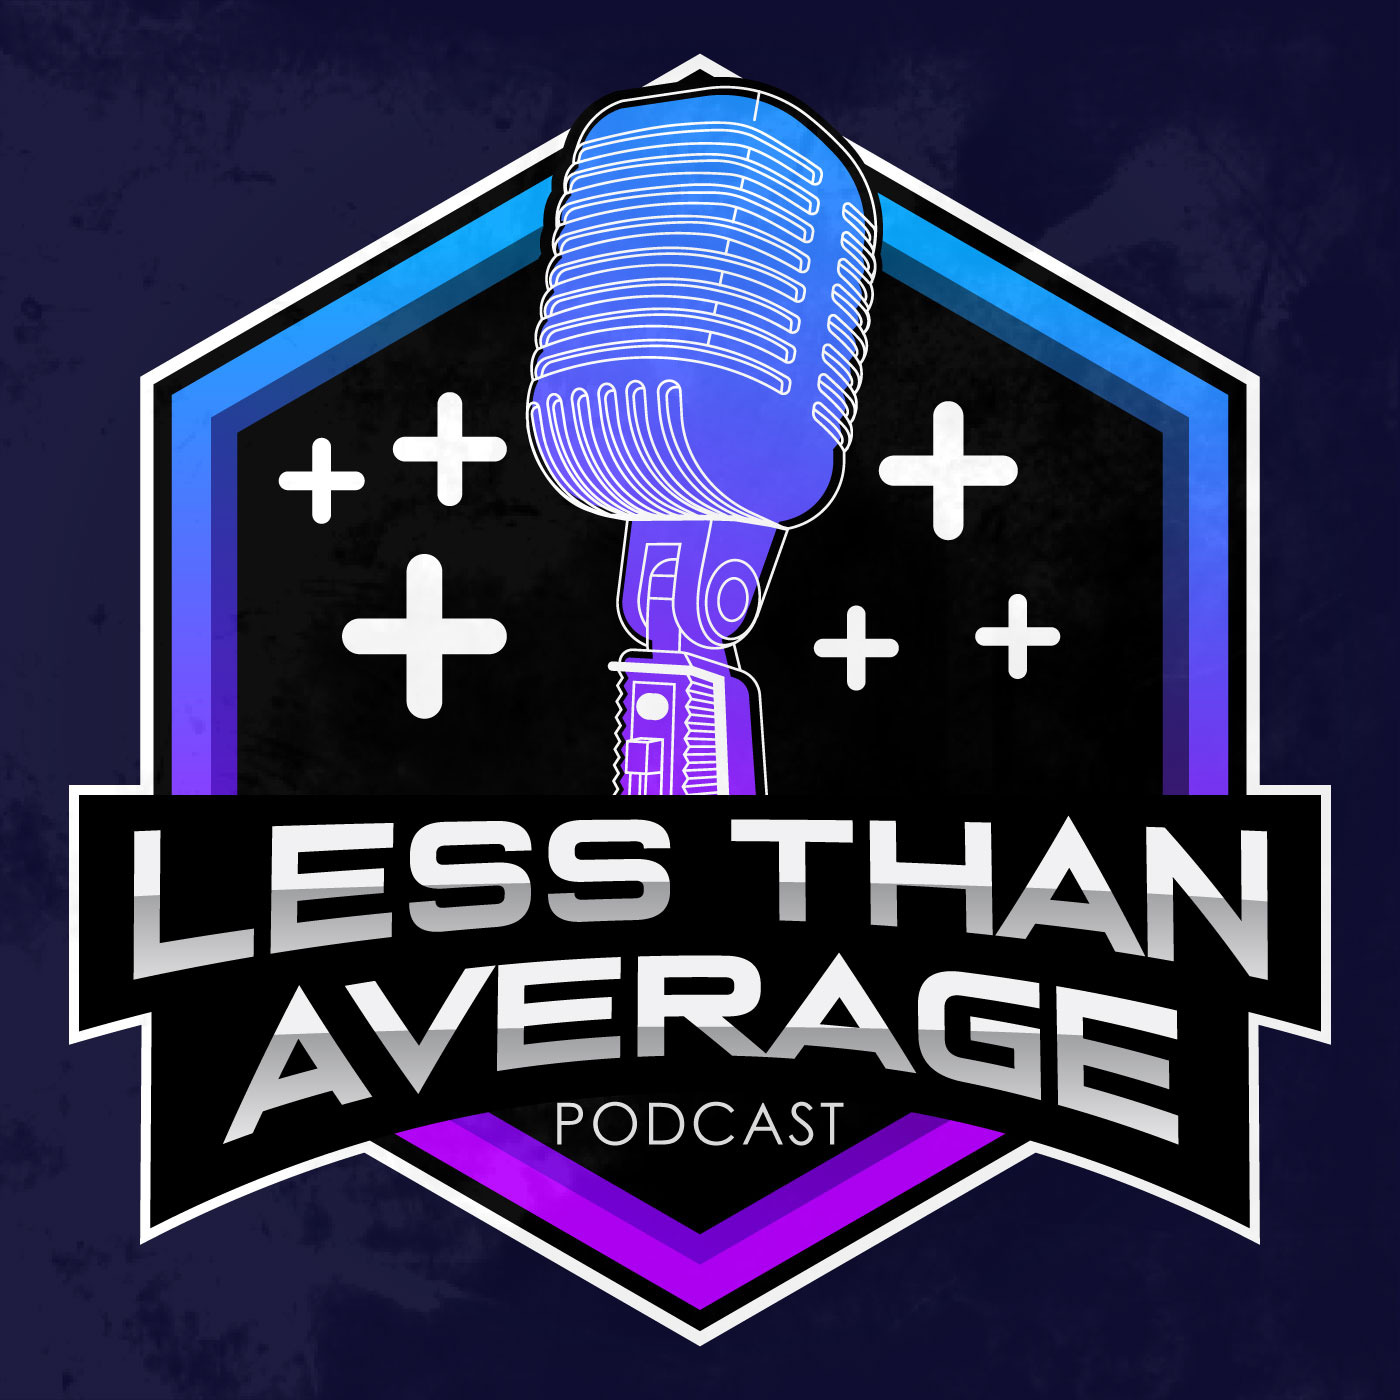 Less Than Average Podcast